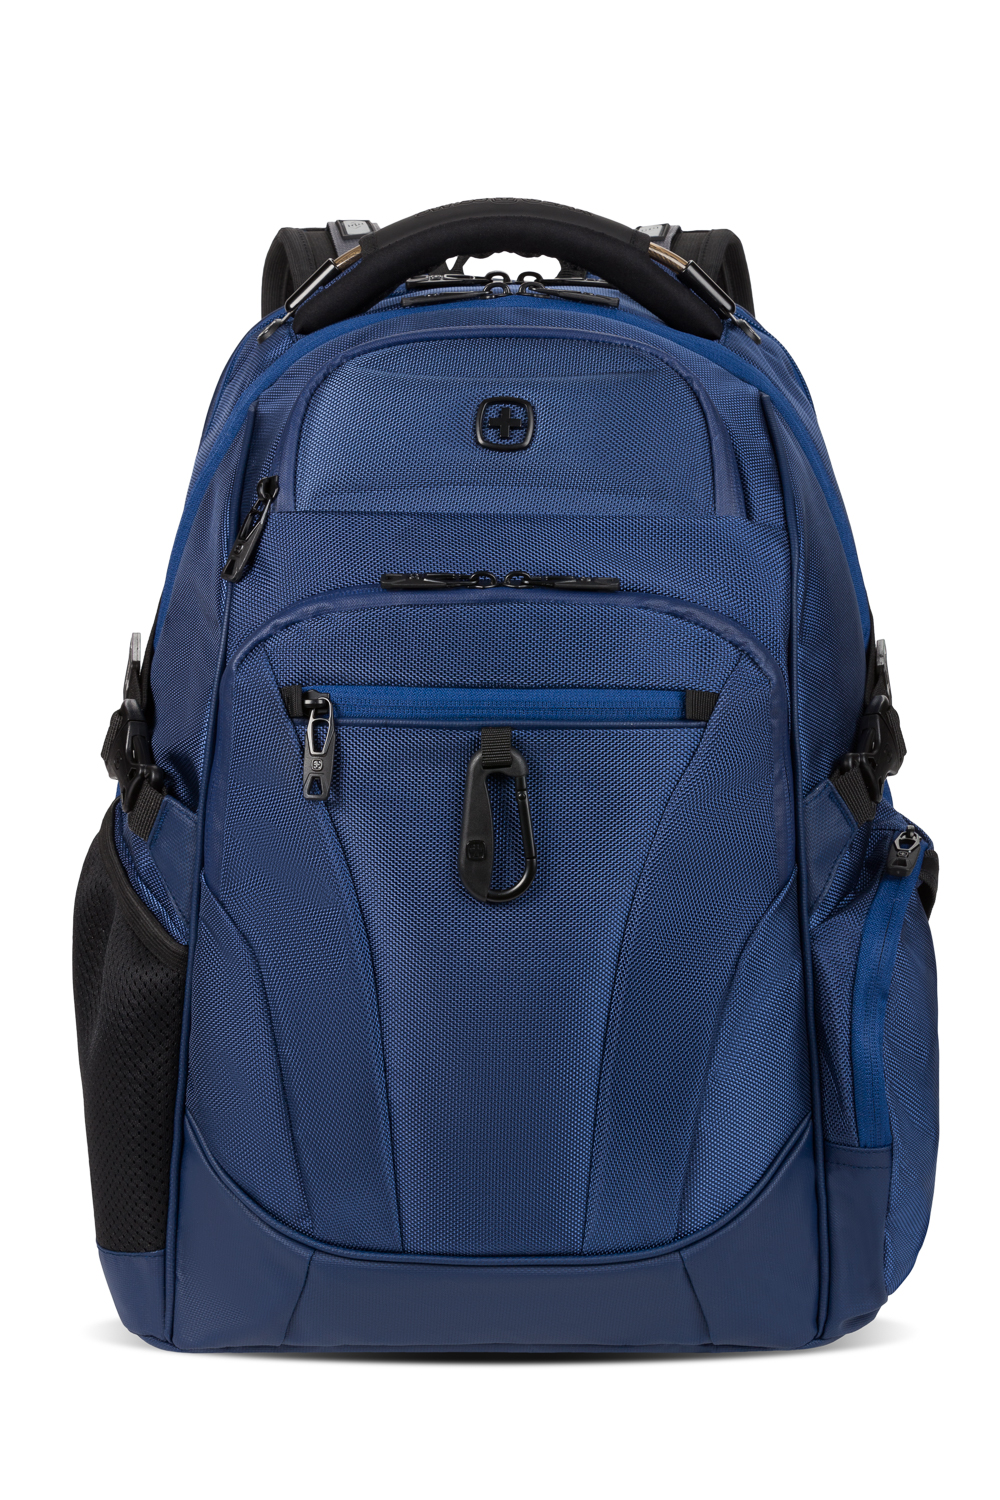 Swissgear 6752 ScanSmart Laptop Backpack - Special Edition